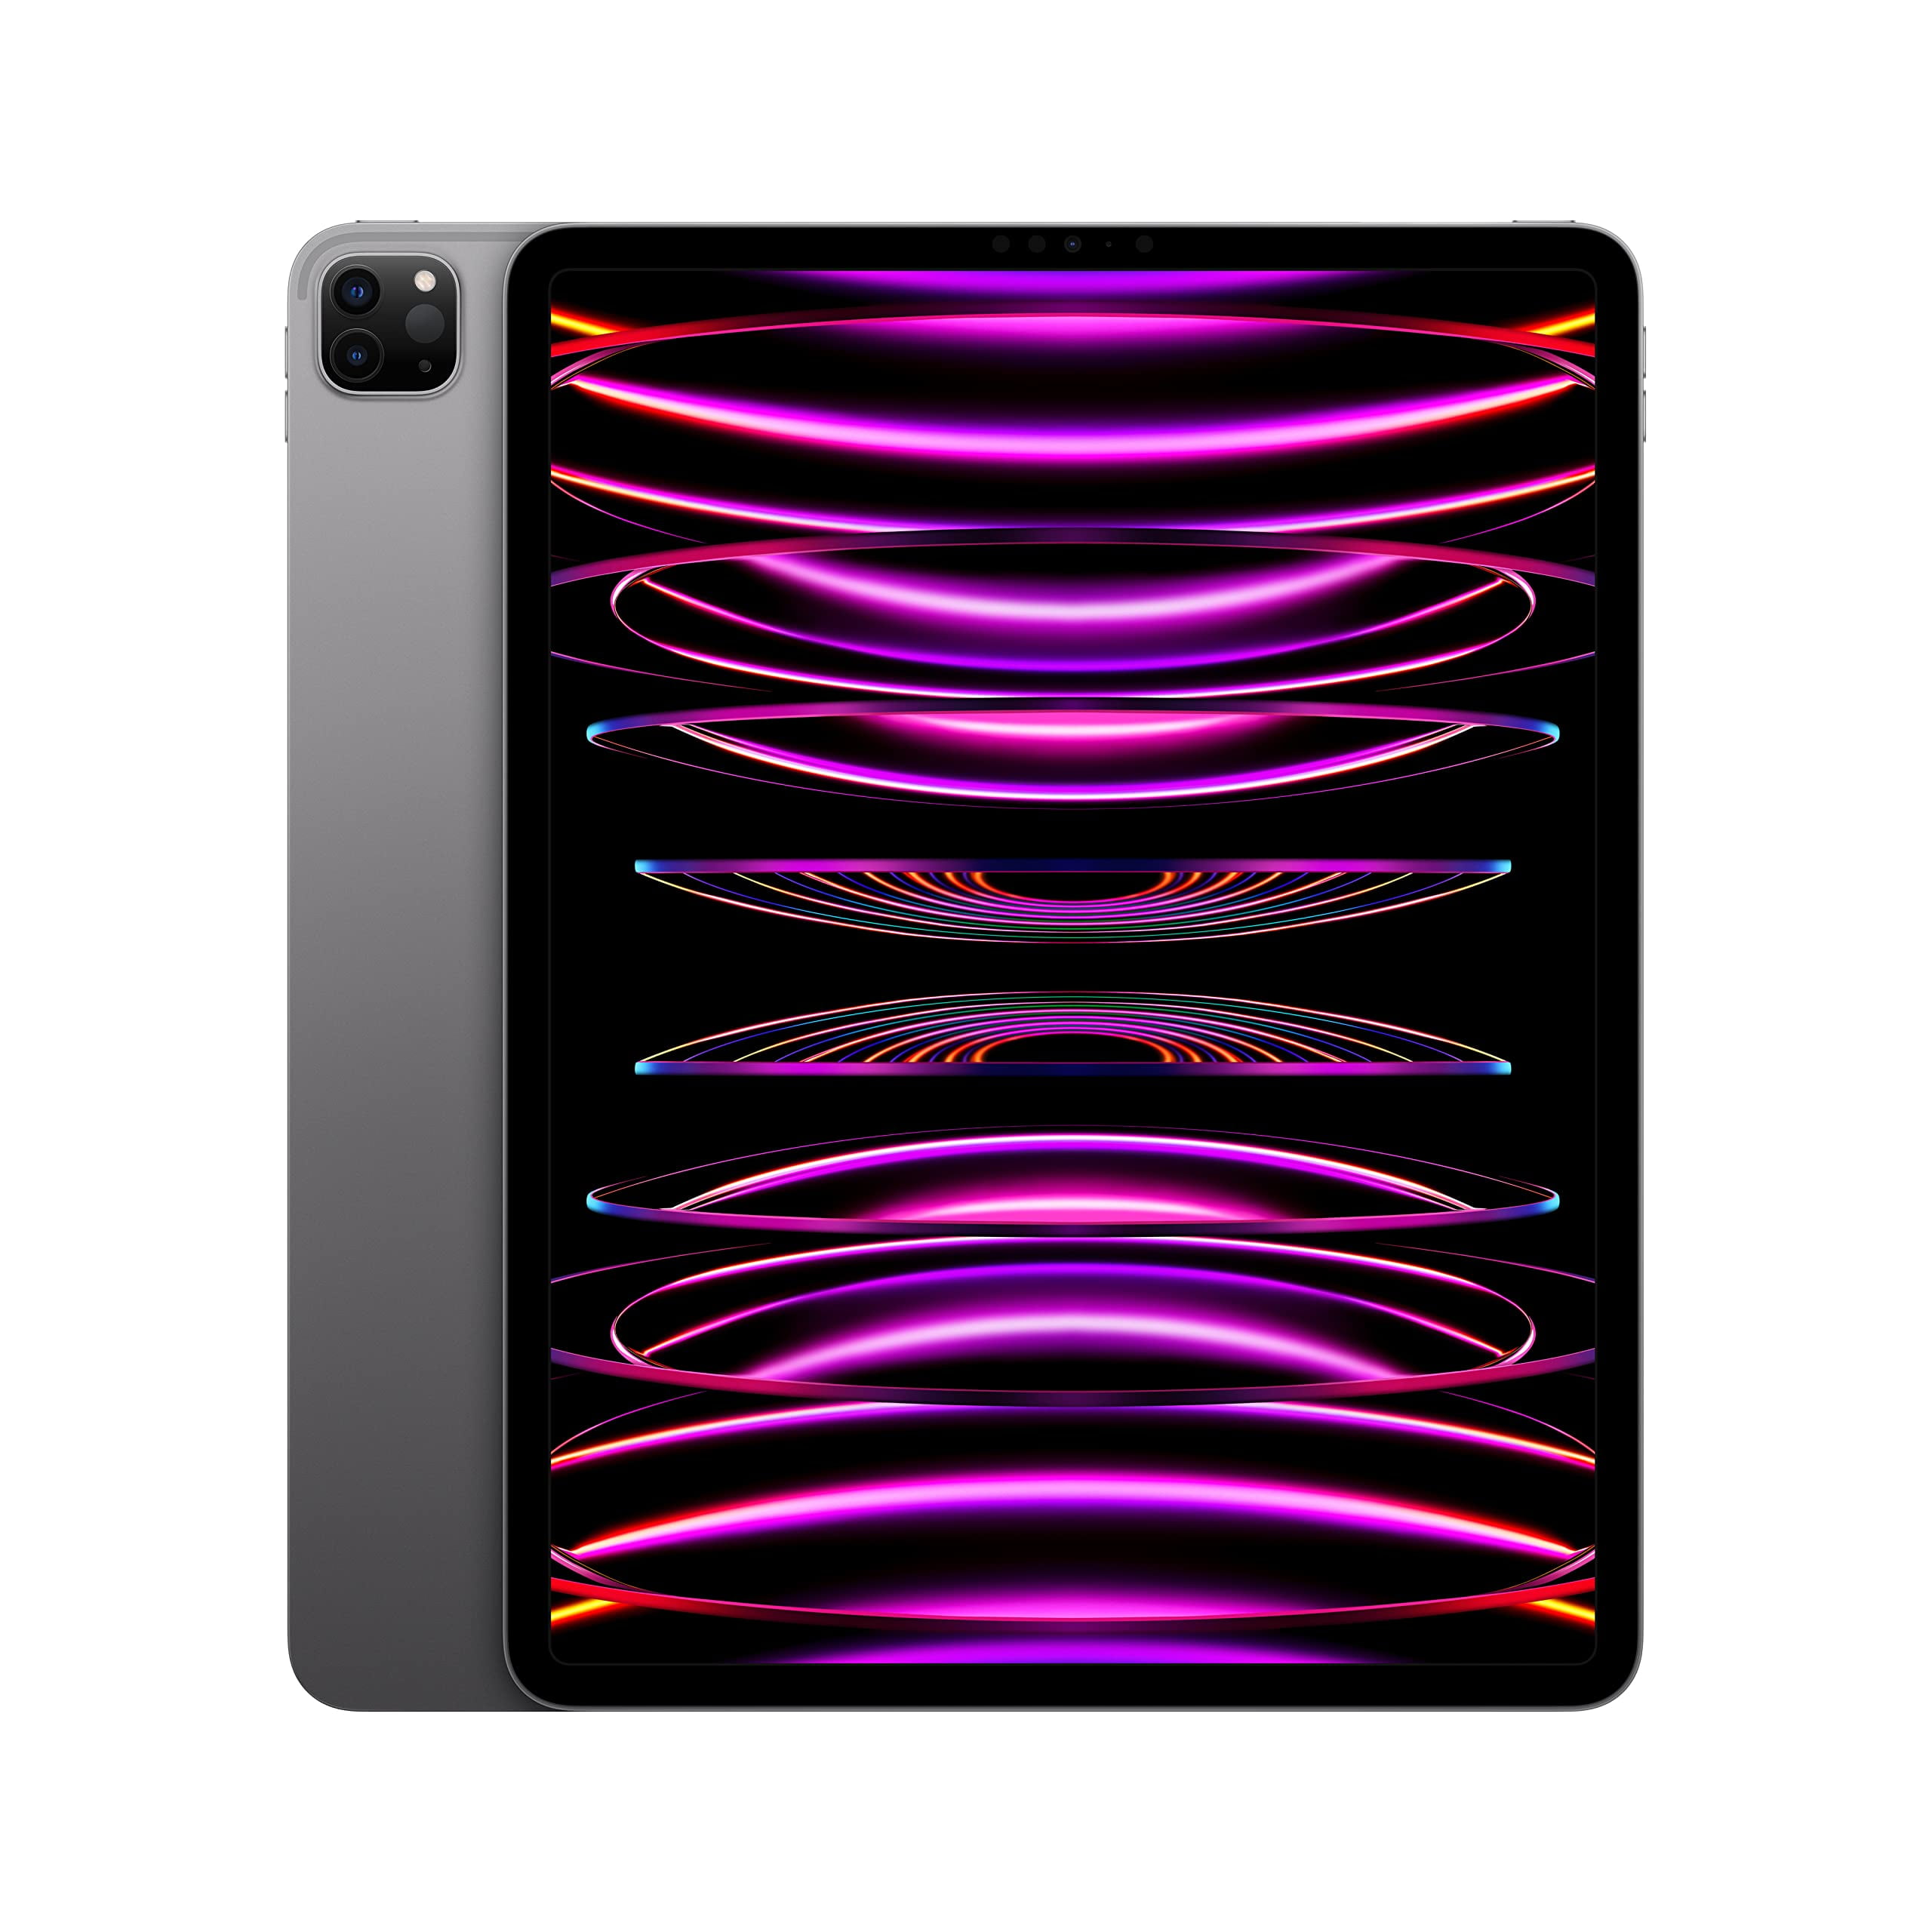 Apple 12.9-inch iPad Pro Wi-Fi 128GB - Space Gray - (6th Gen)